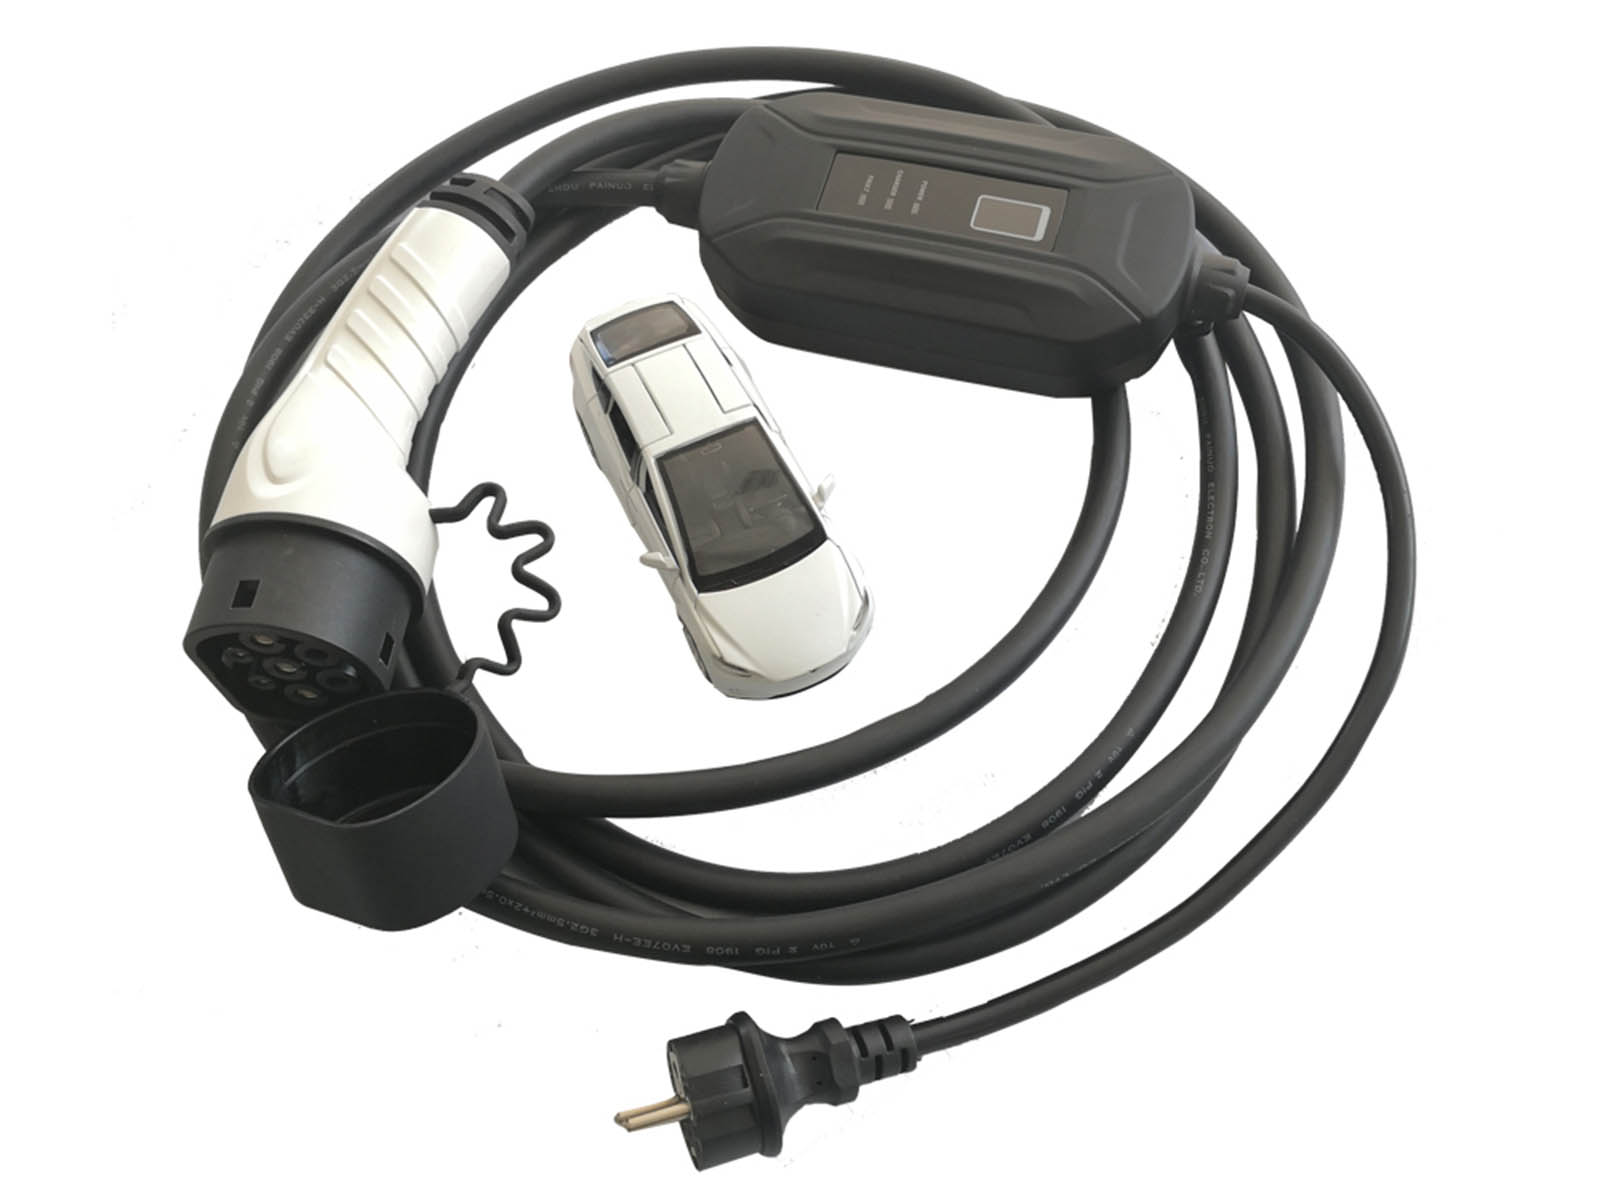 EV Connector 16A Type 2 Male Plug to Schuko socket EV Charging